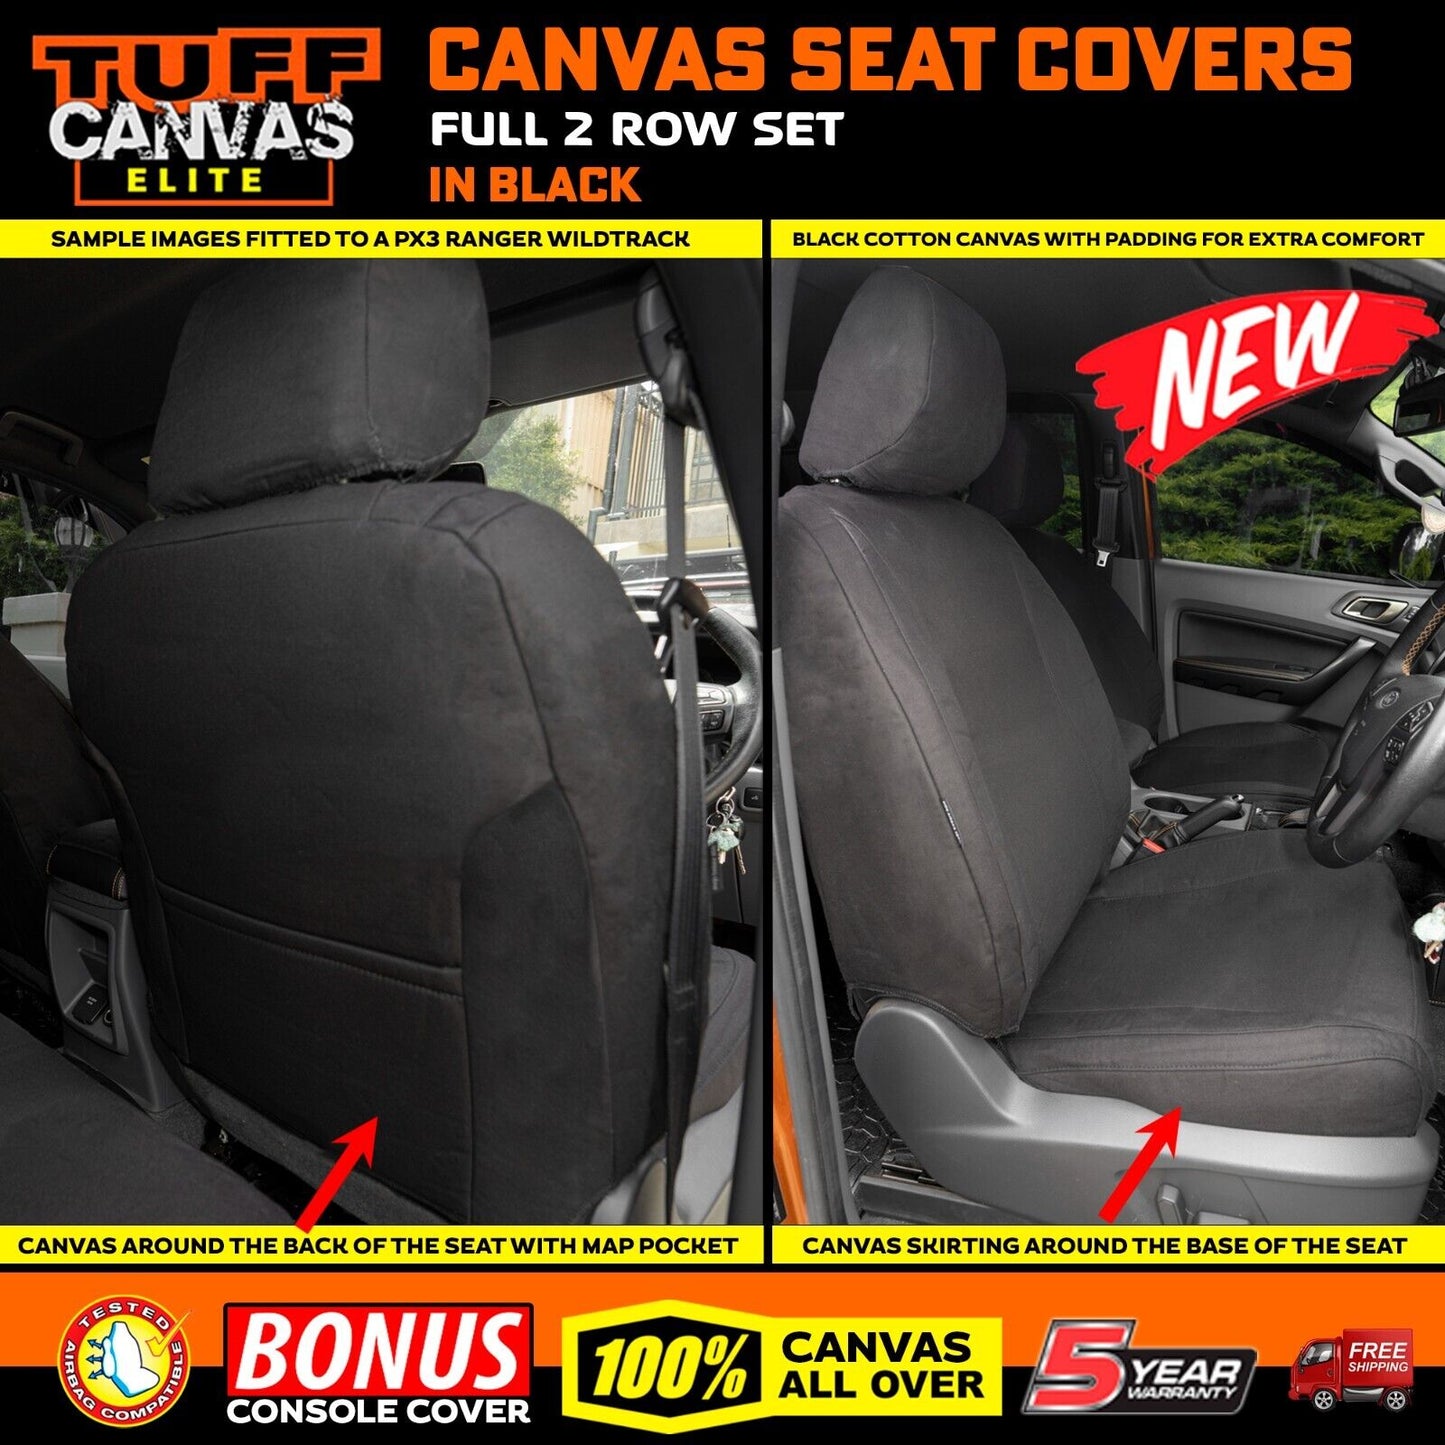 Tuff Elite Canvas Seat Covers 2 Rows For Toyota Prado 150 Series GX GXL VX 7/2021-2023 Black